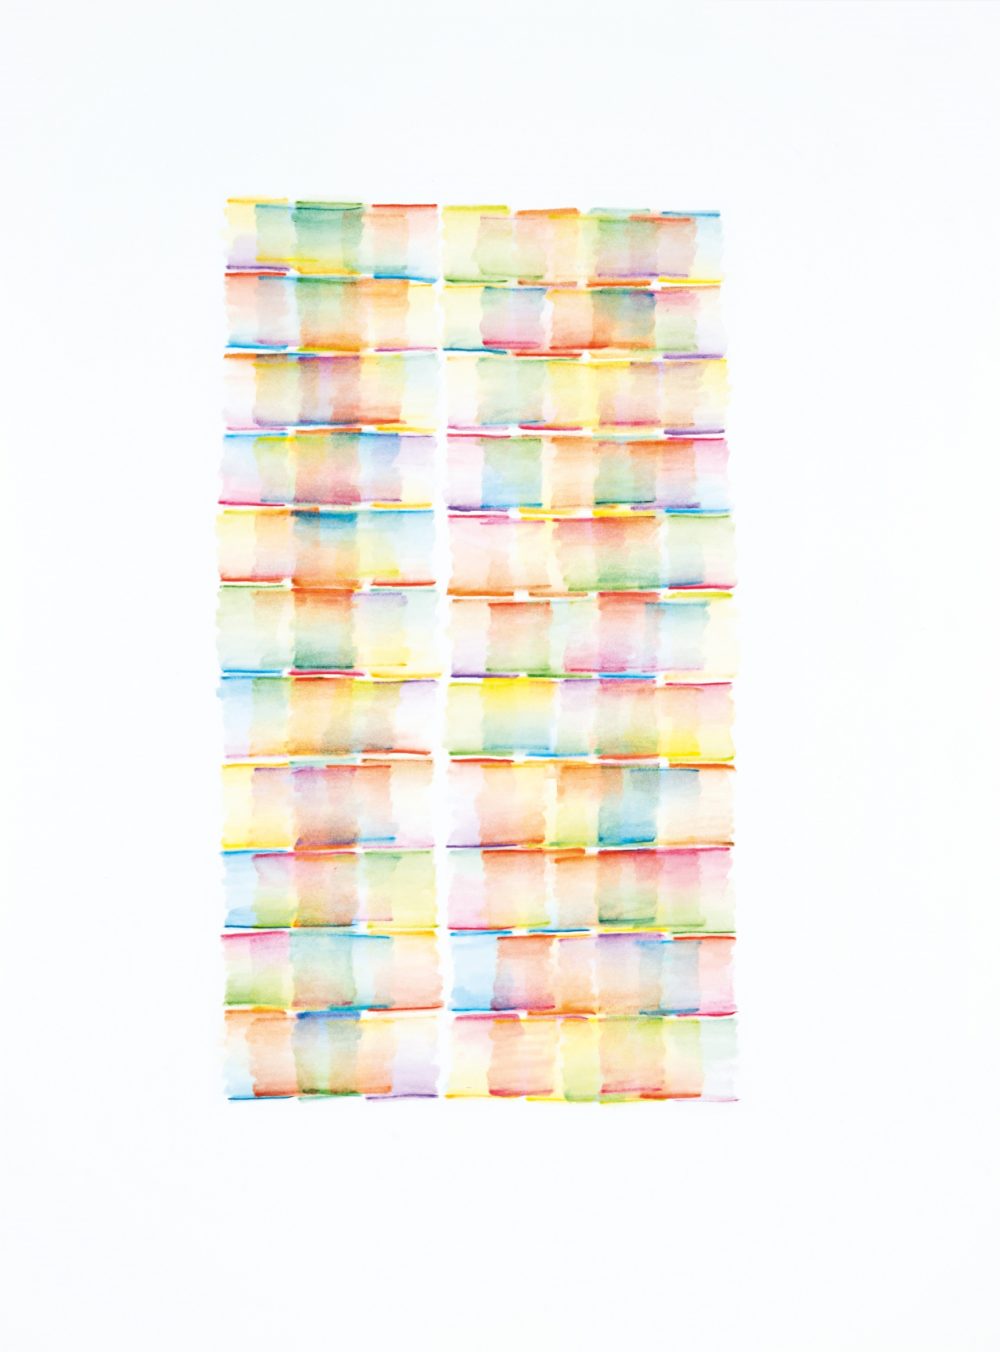 Farbige Systeme 4, 2018, Aquarellstift/Papier, 40 x 30 cm © VG Bild-Kunst Bonn, 2023/Doris Erbacher, Foto: Dorothea Burkhardt